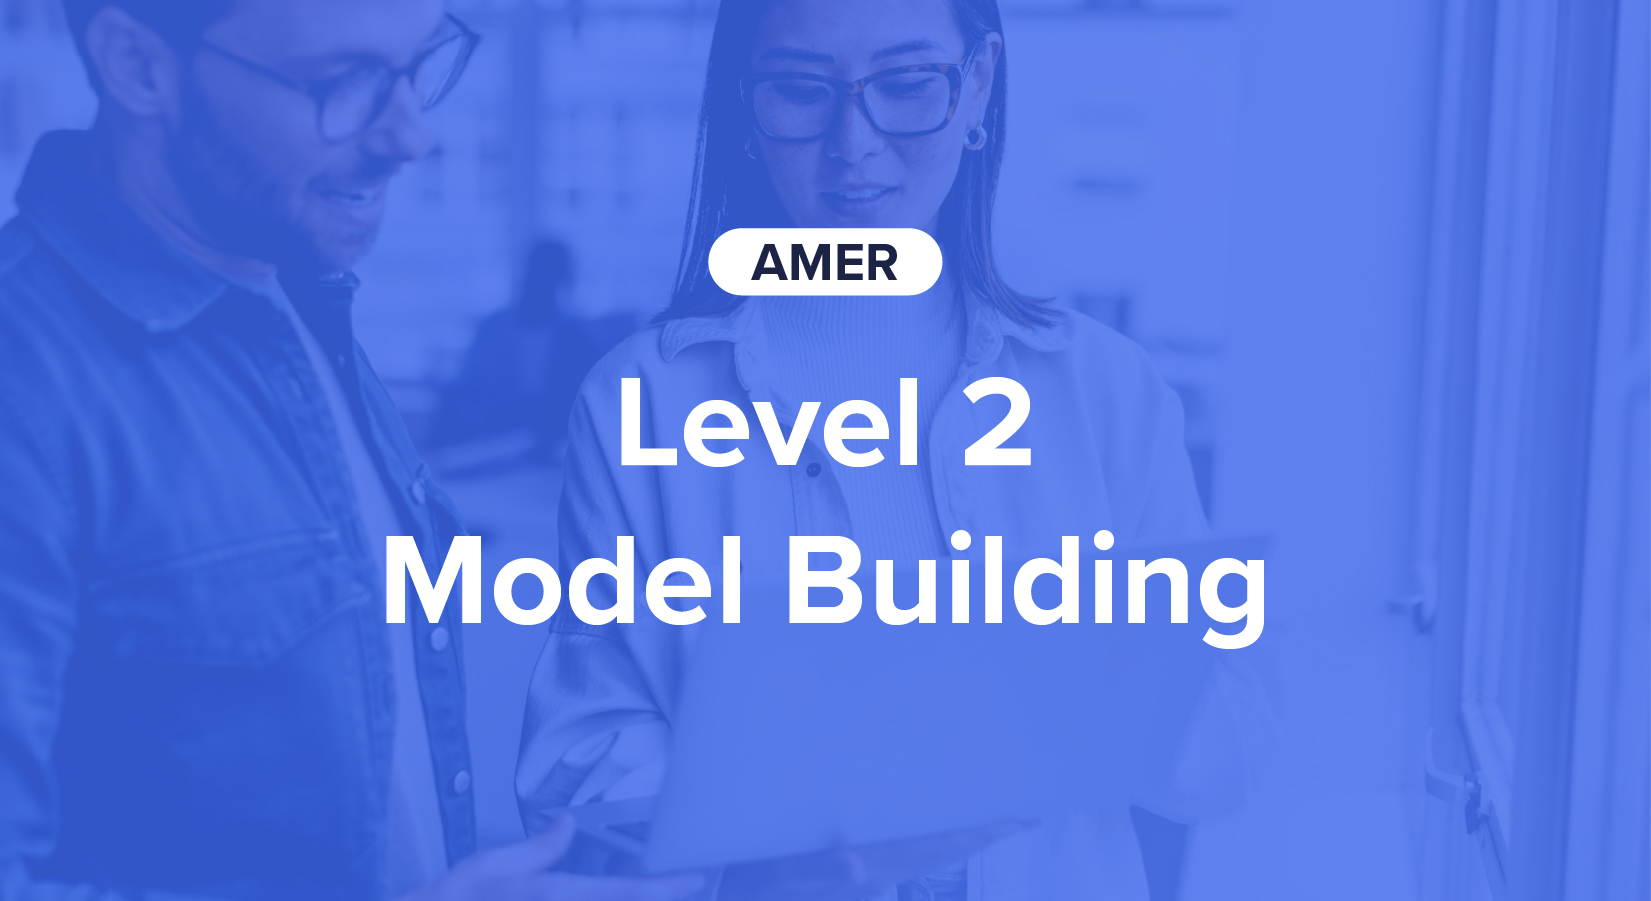 Academy Level 2 Model Building AMER